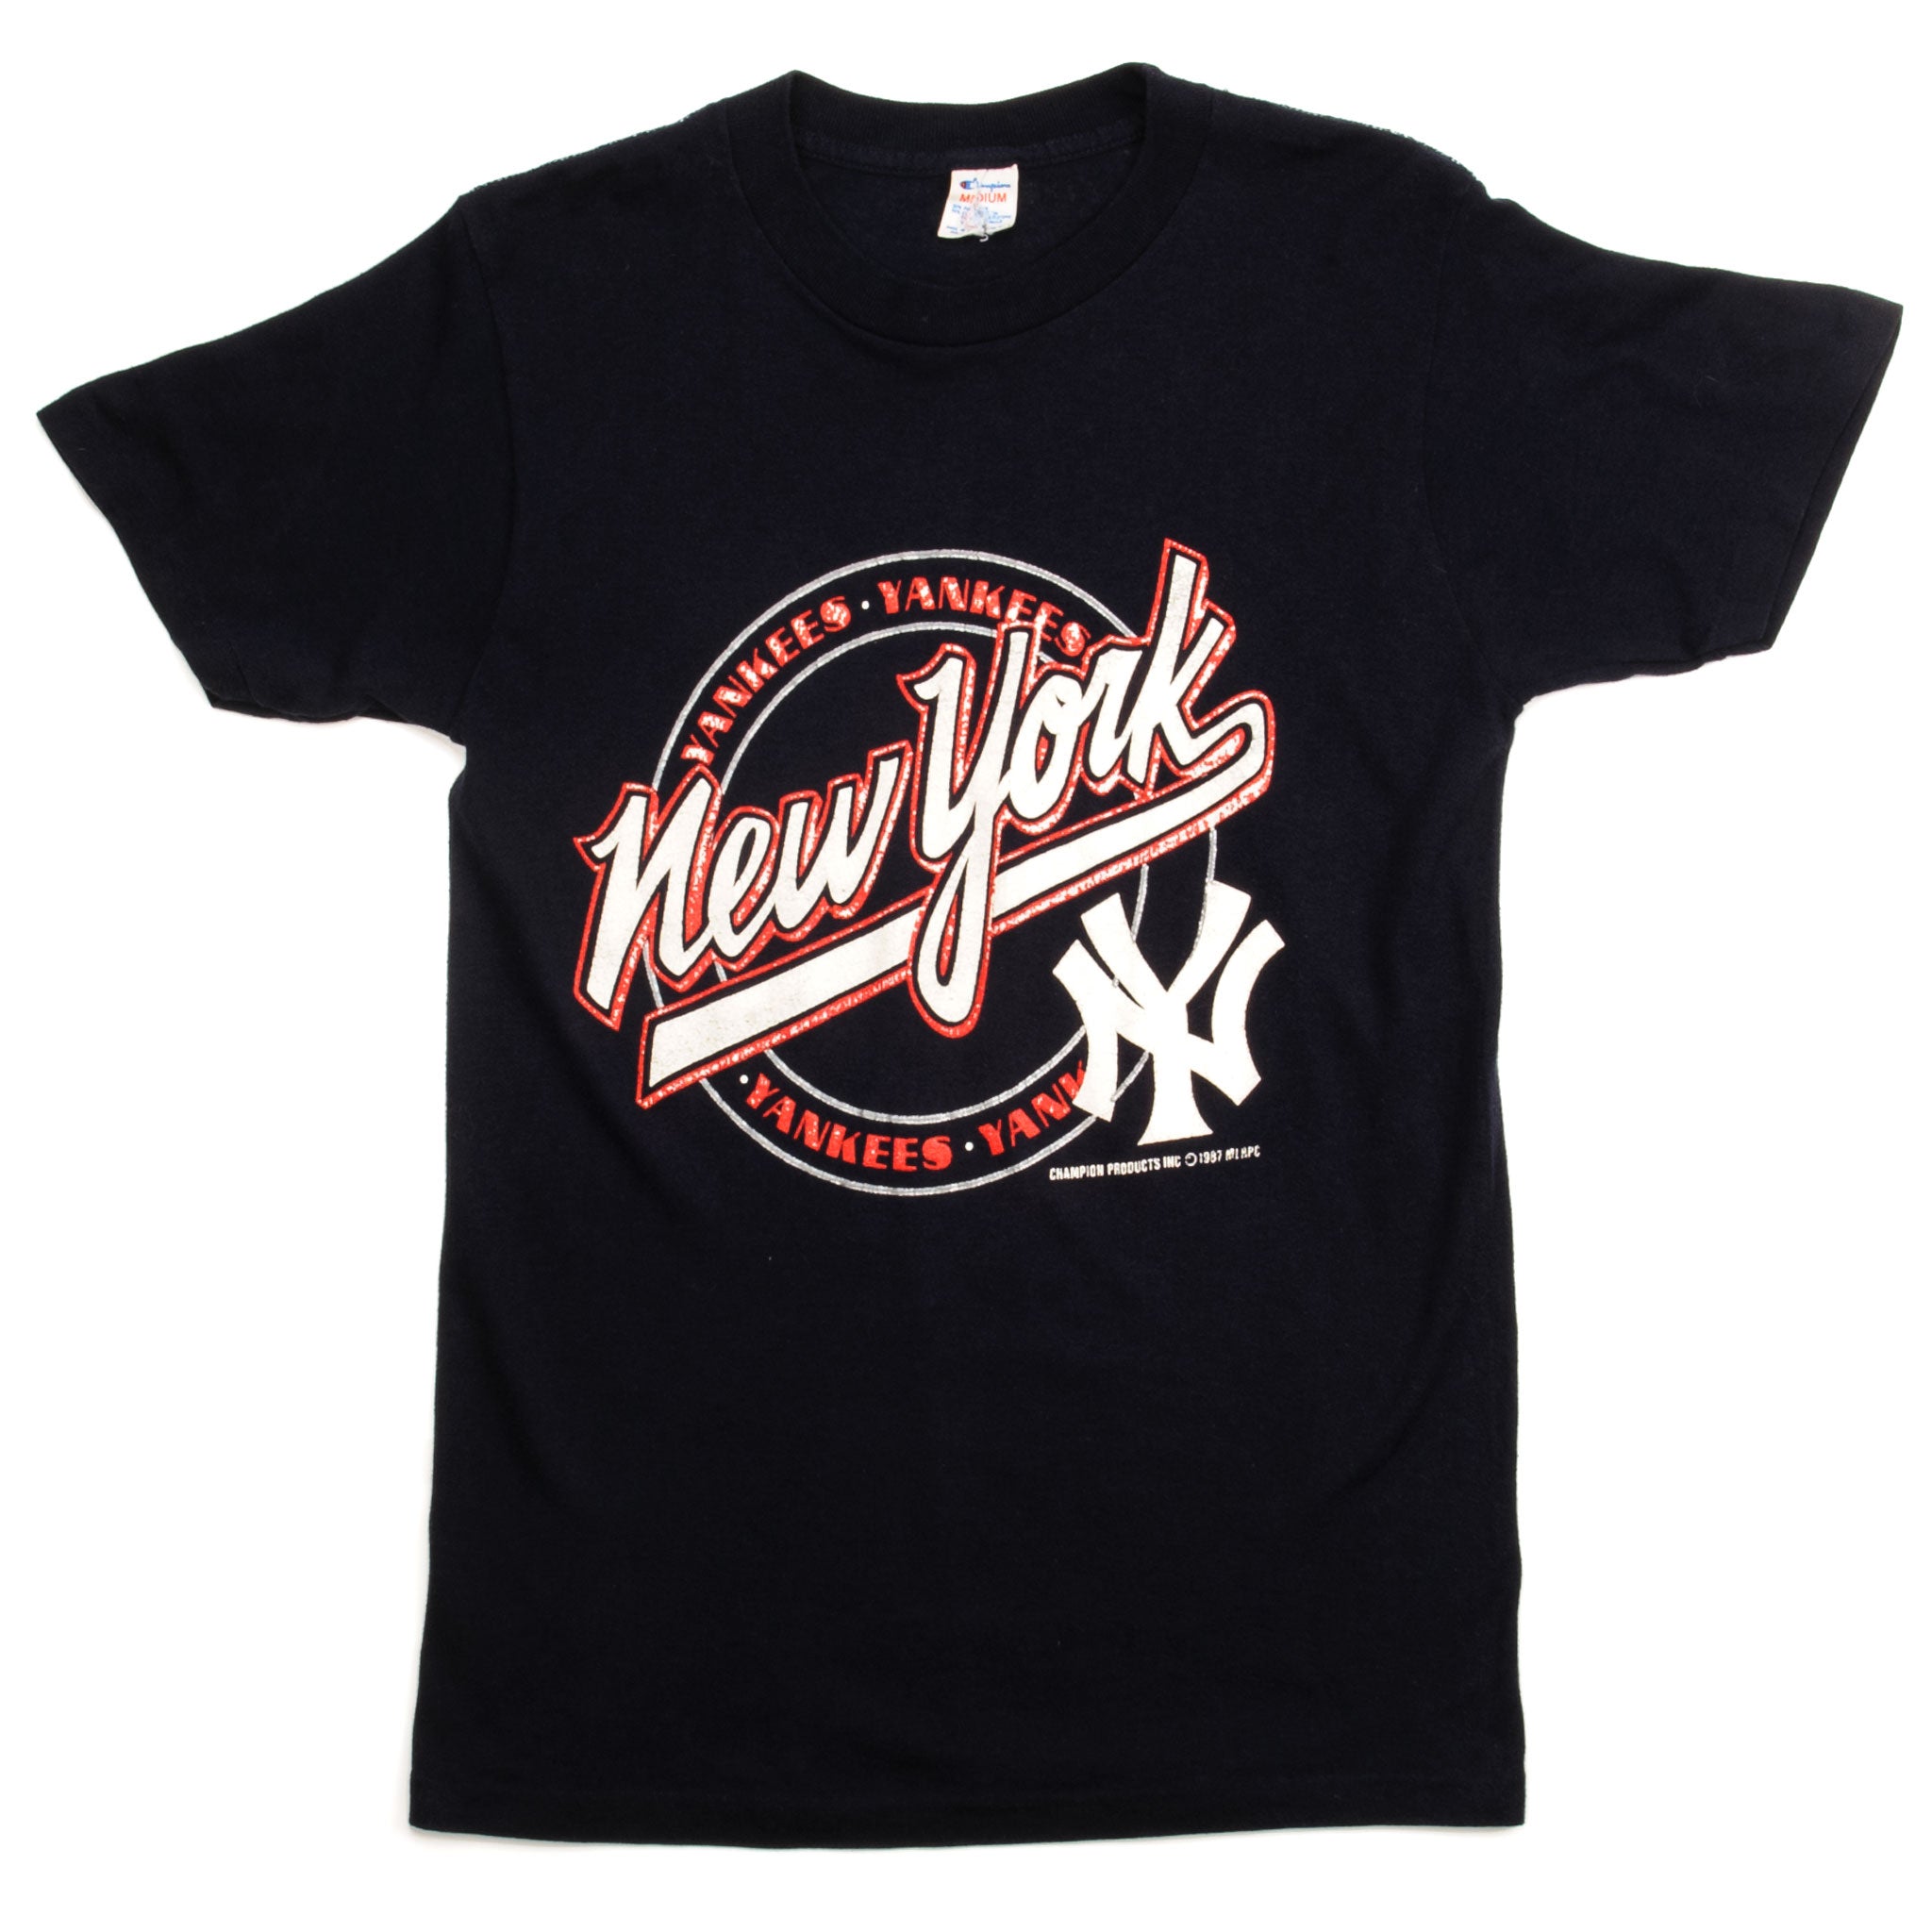 new york yankees t-shirt